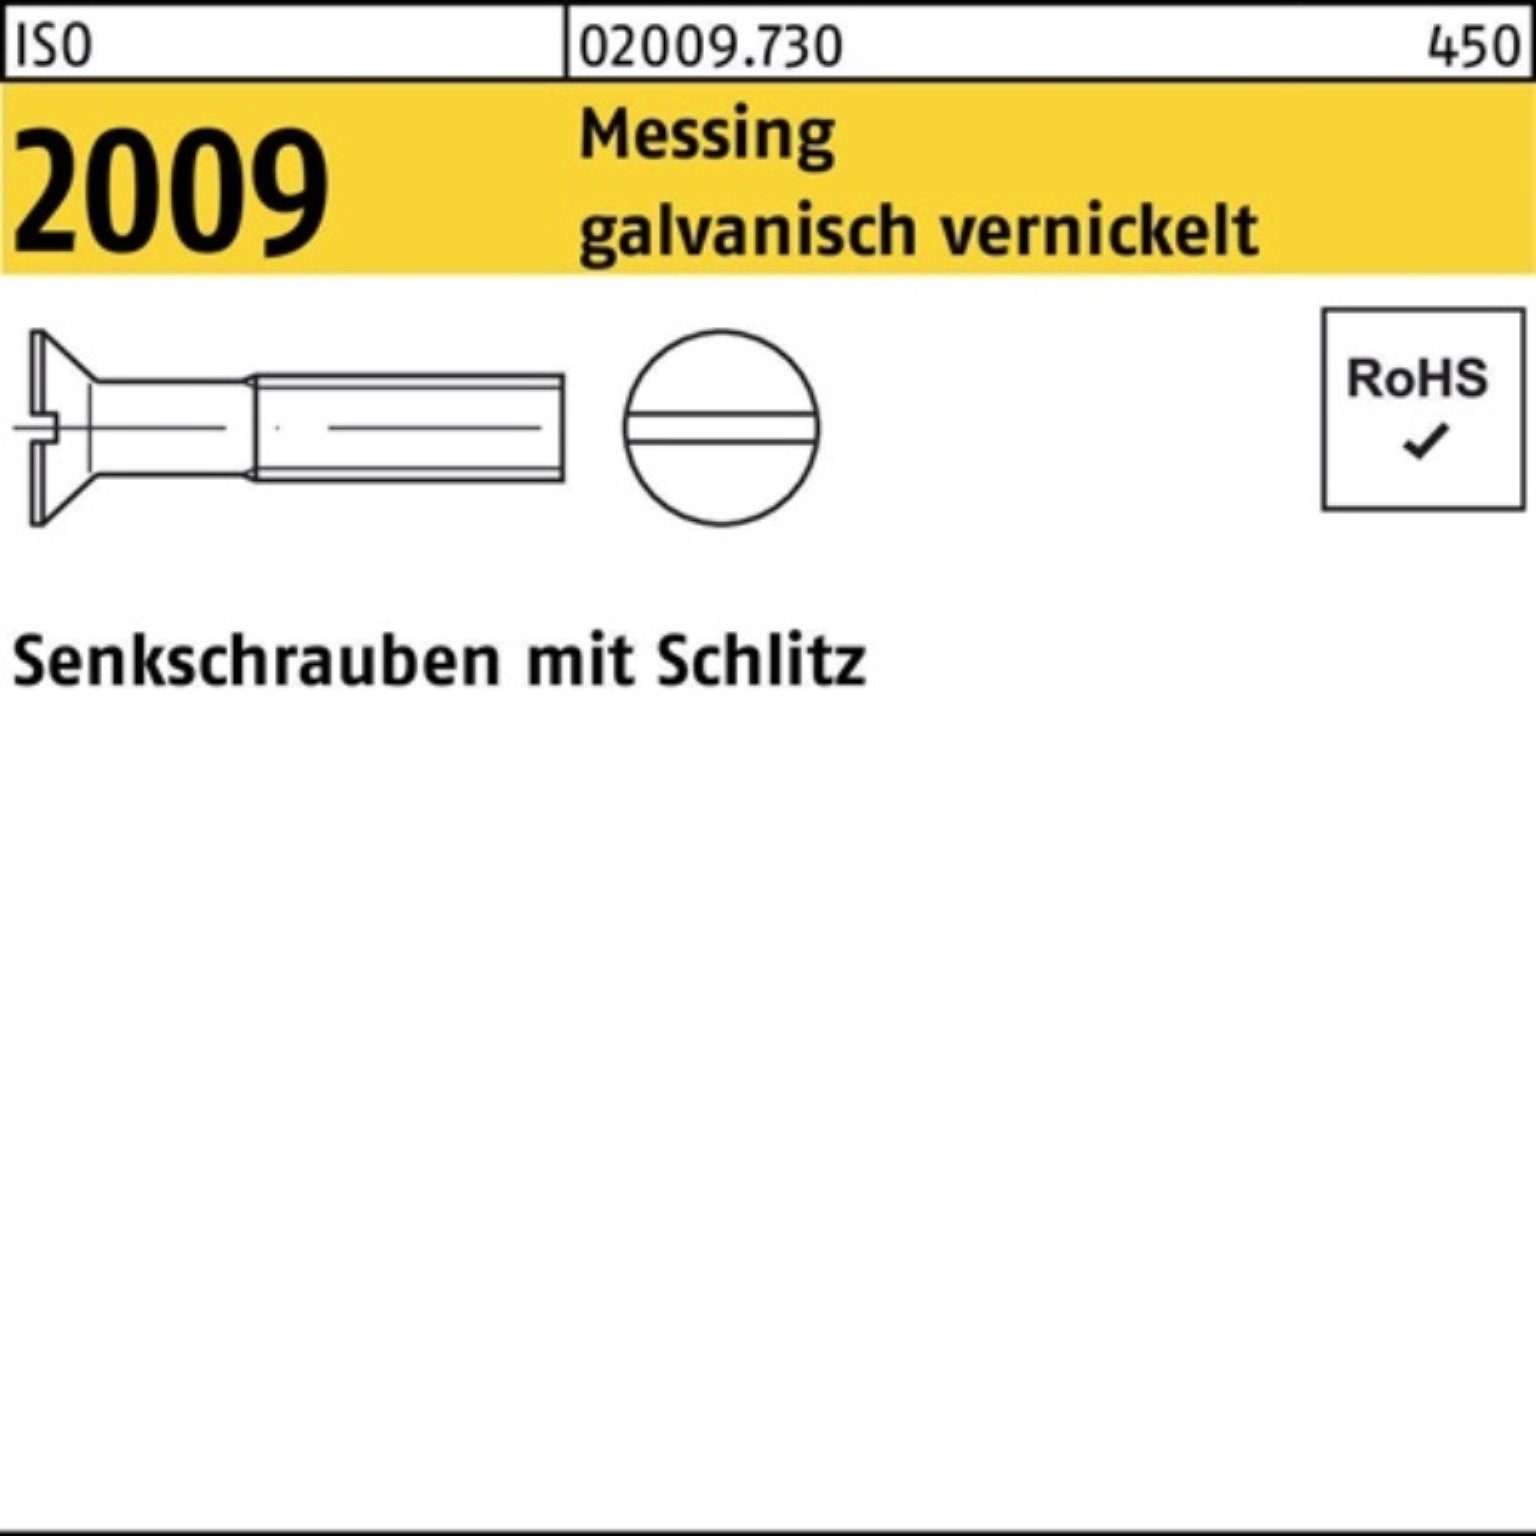 vernicke Messing 200er galv. Reyher M6x 2009 Senkschraube 20 Pack Senkschraube Schlitz ISO